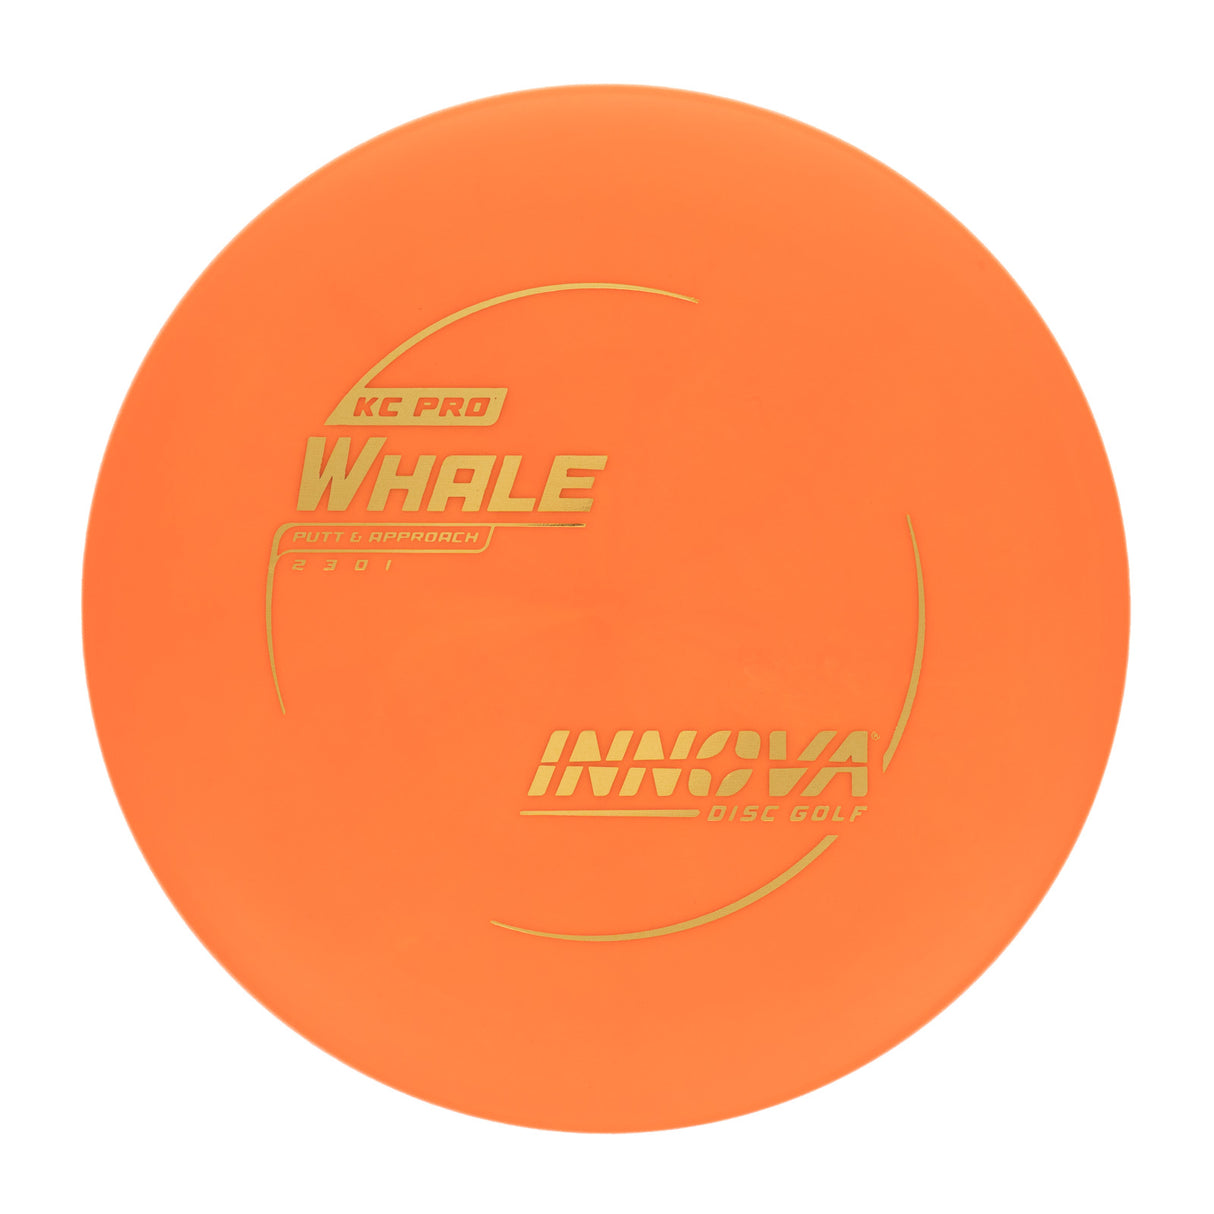 Innova Whale - KC Pro 171g | Style 0001